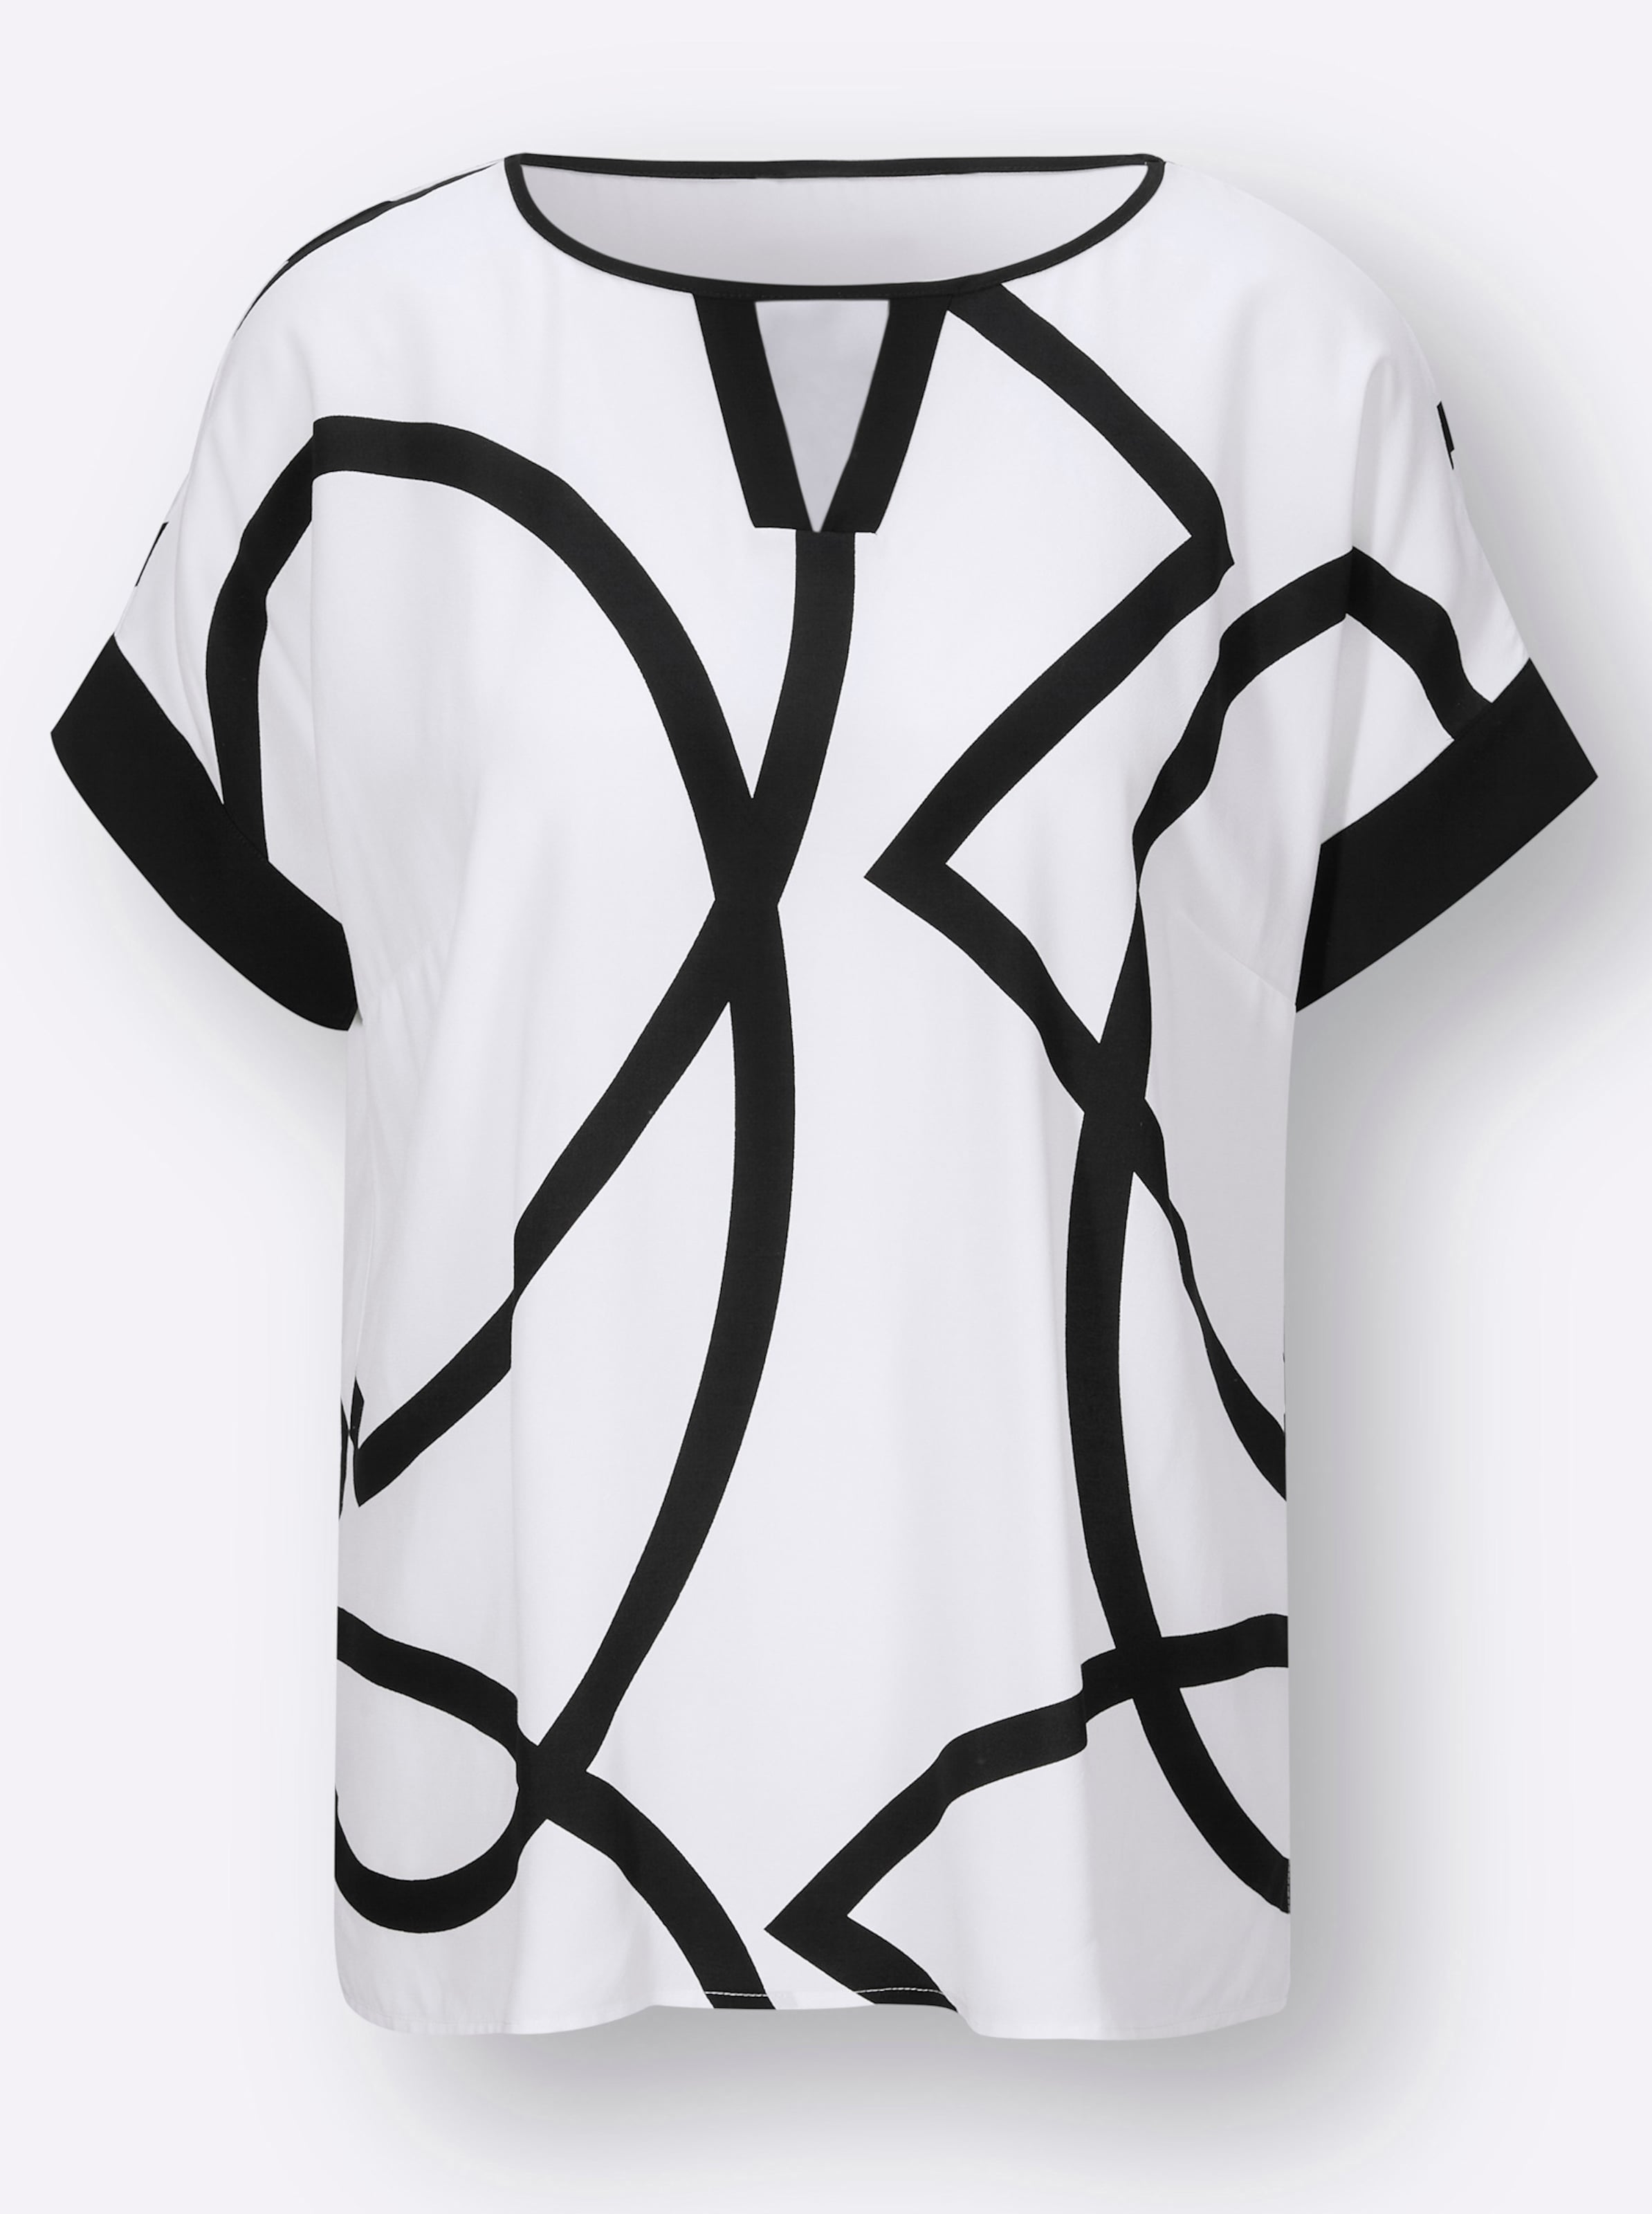 Witt Weiden Damen Bluse schwarz weiß bedruckt  - Onlineshop Witt Weiden